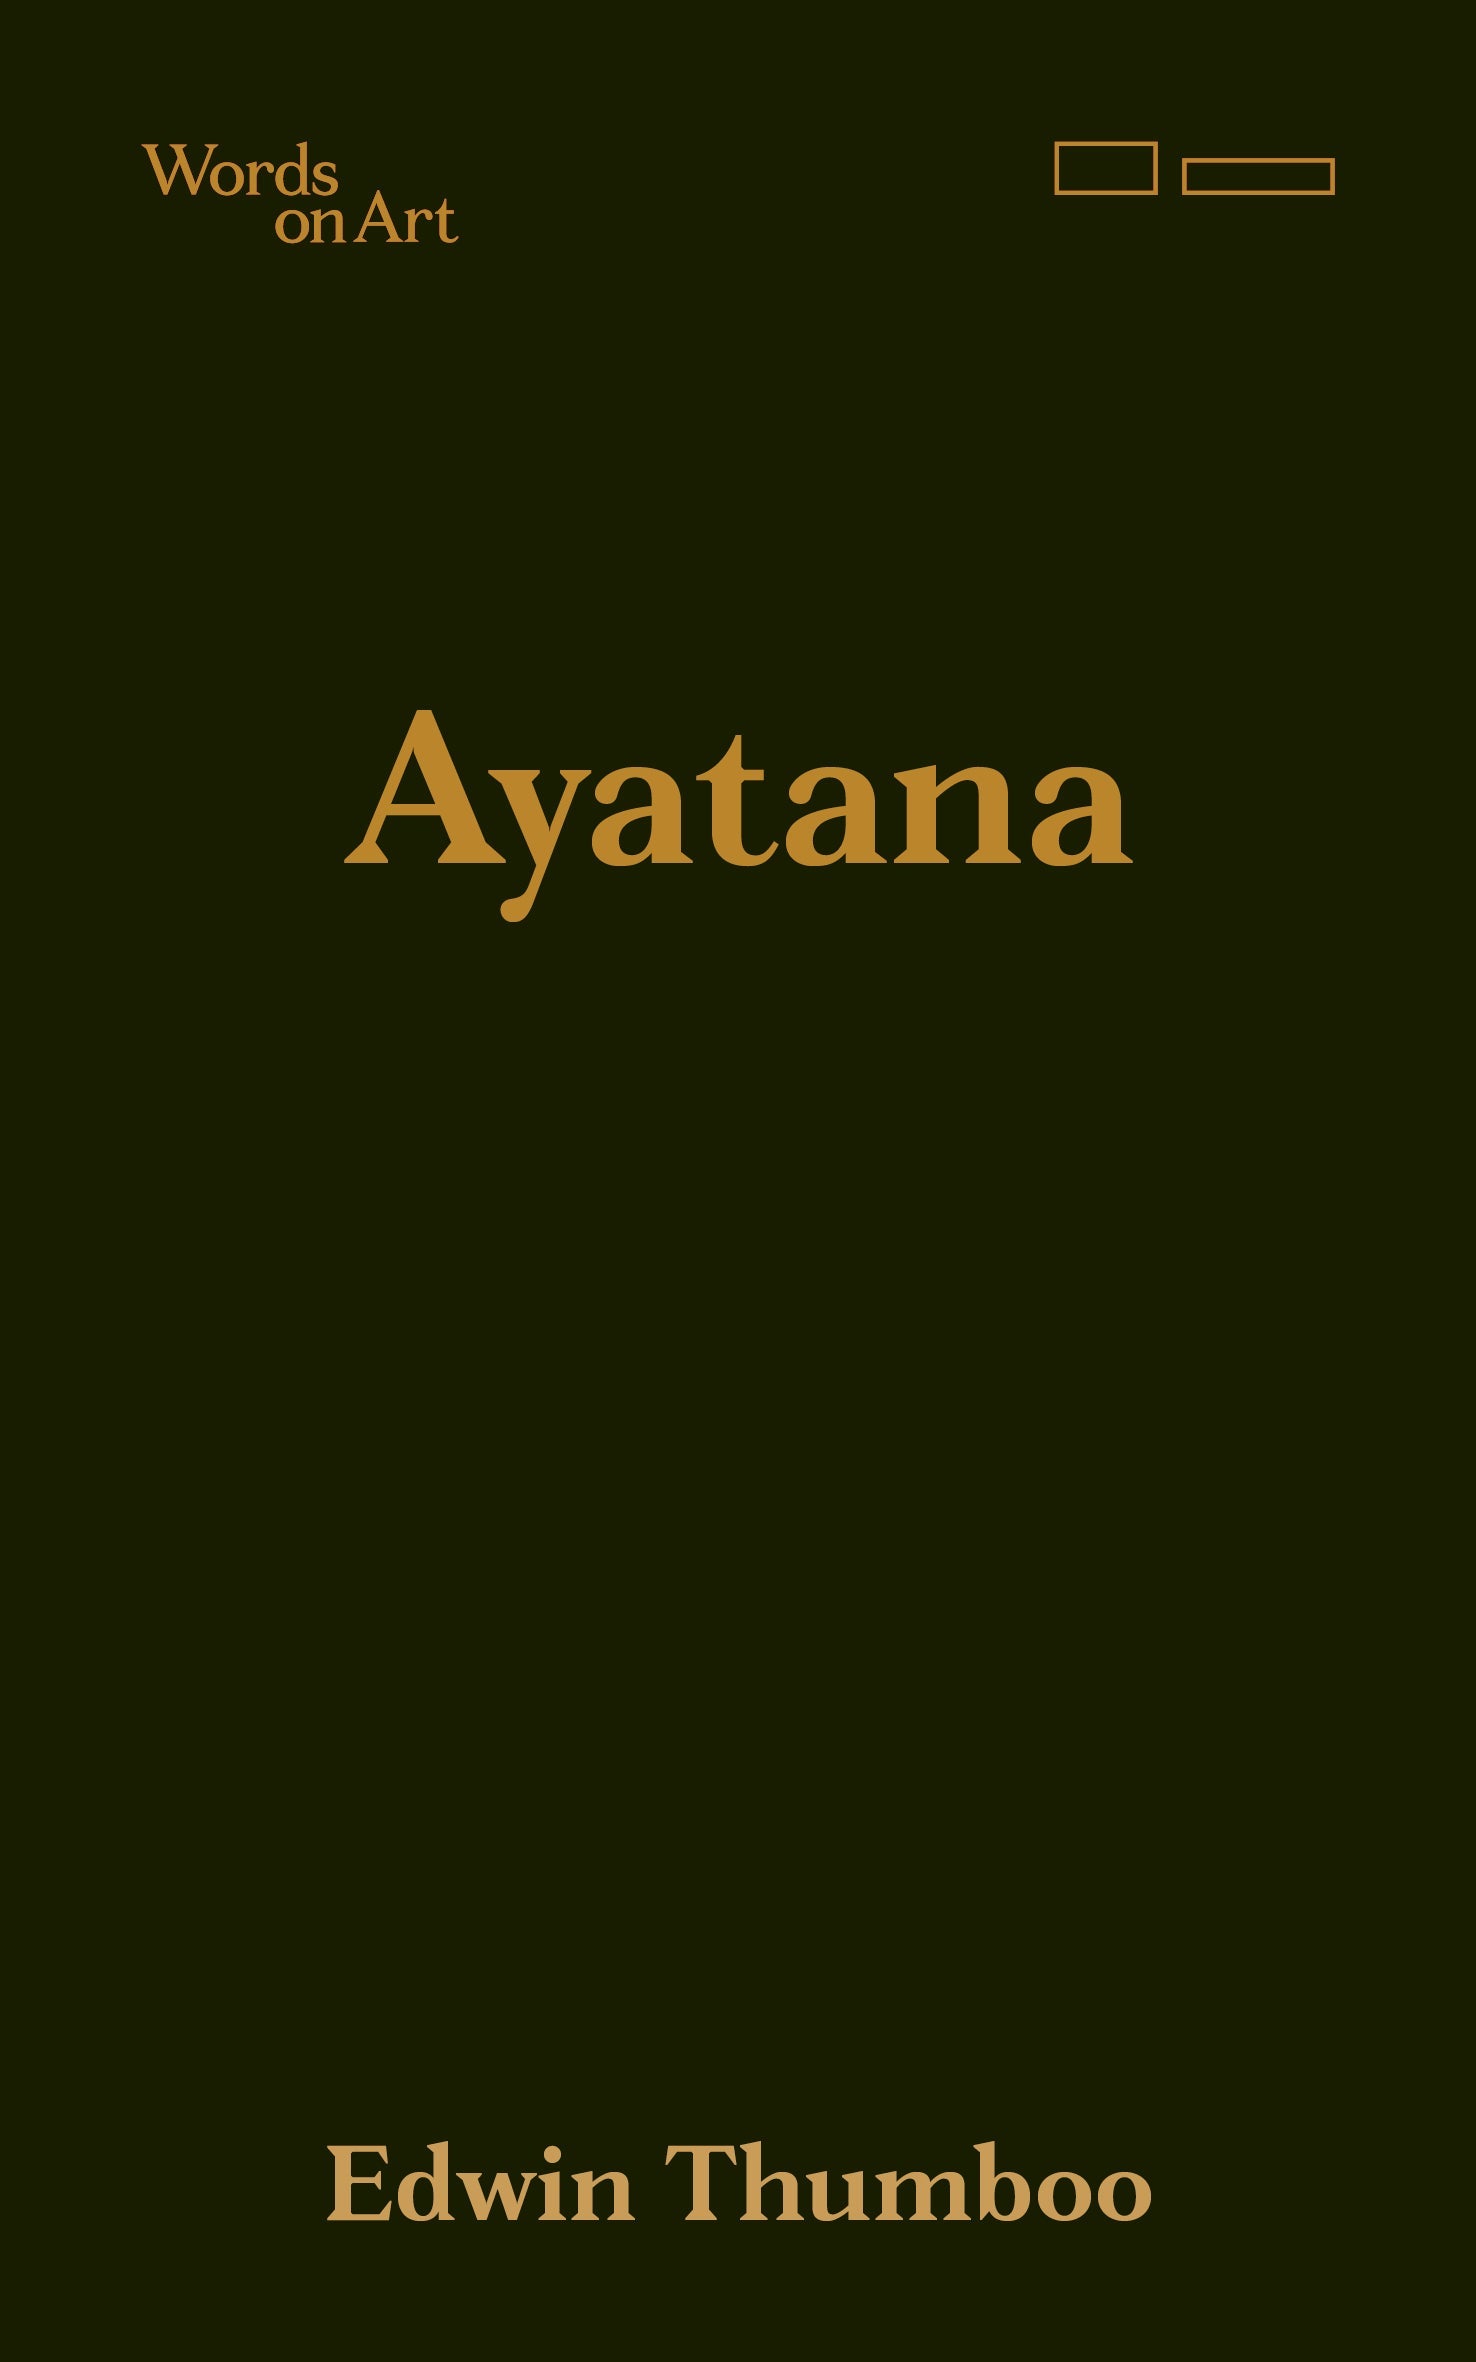 WORDS ON ART: AYATANA